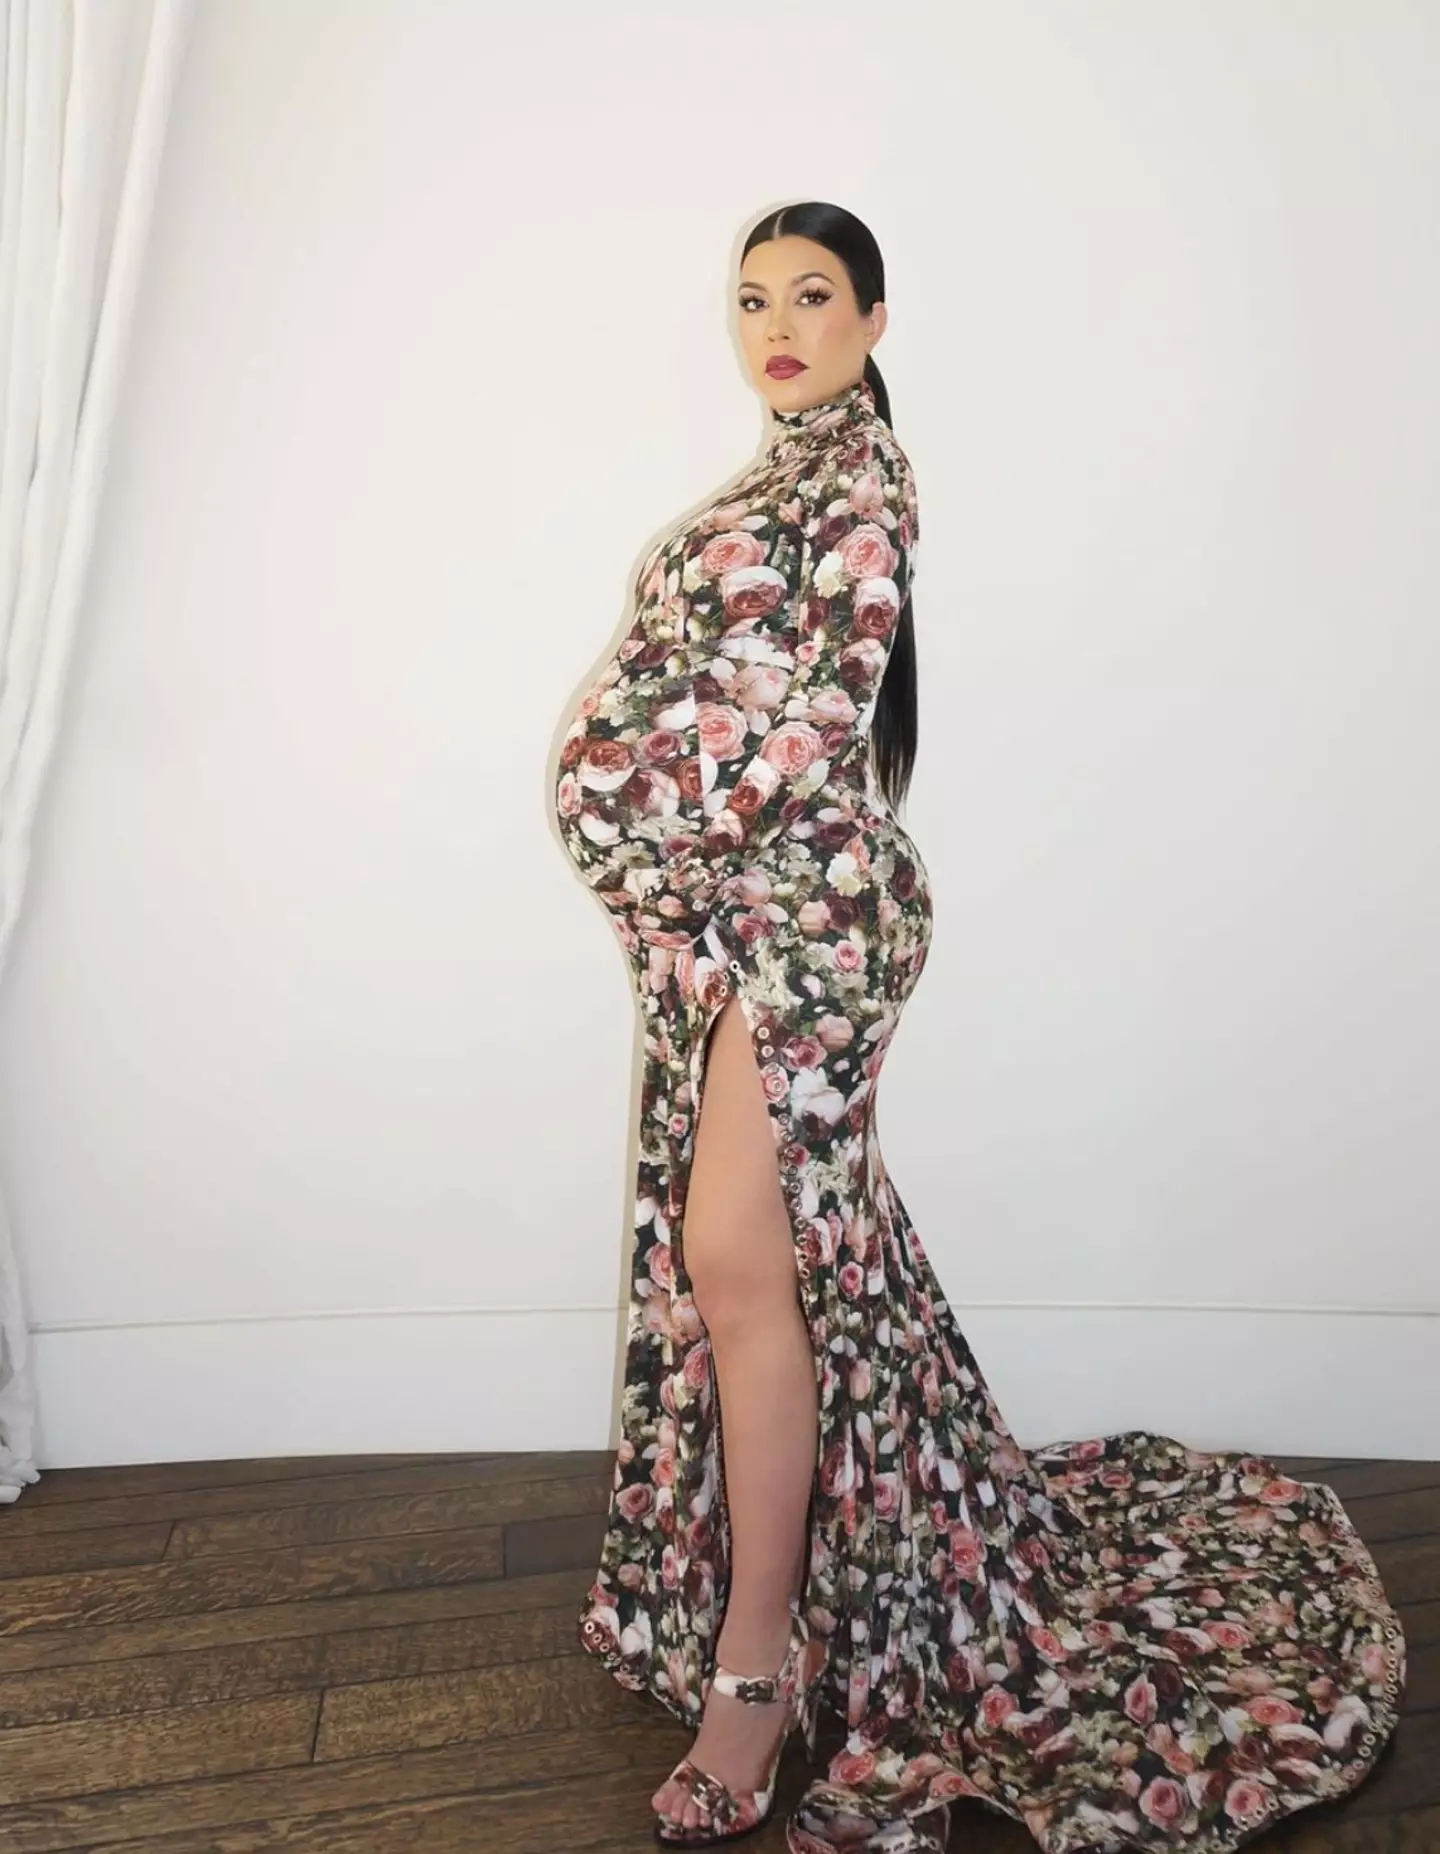 Kourtney Kardashian is due to give birth any day now.